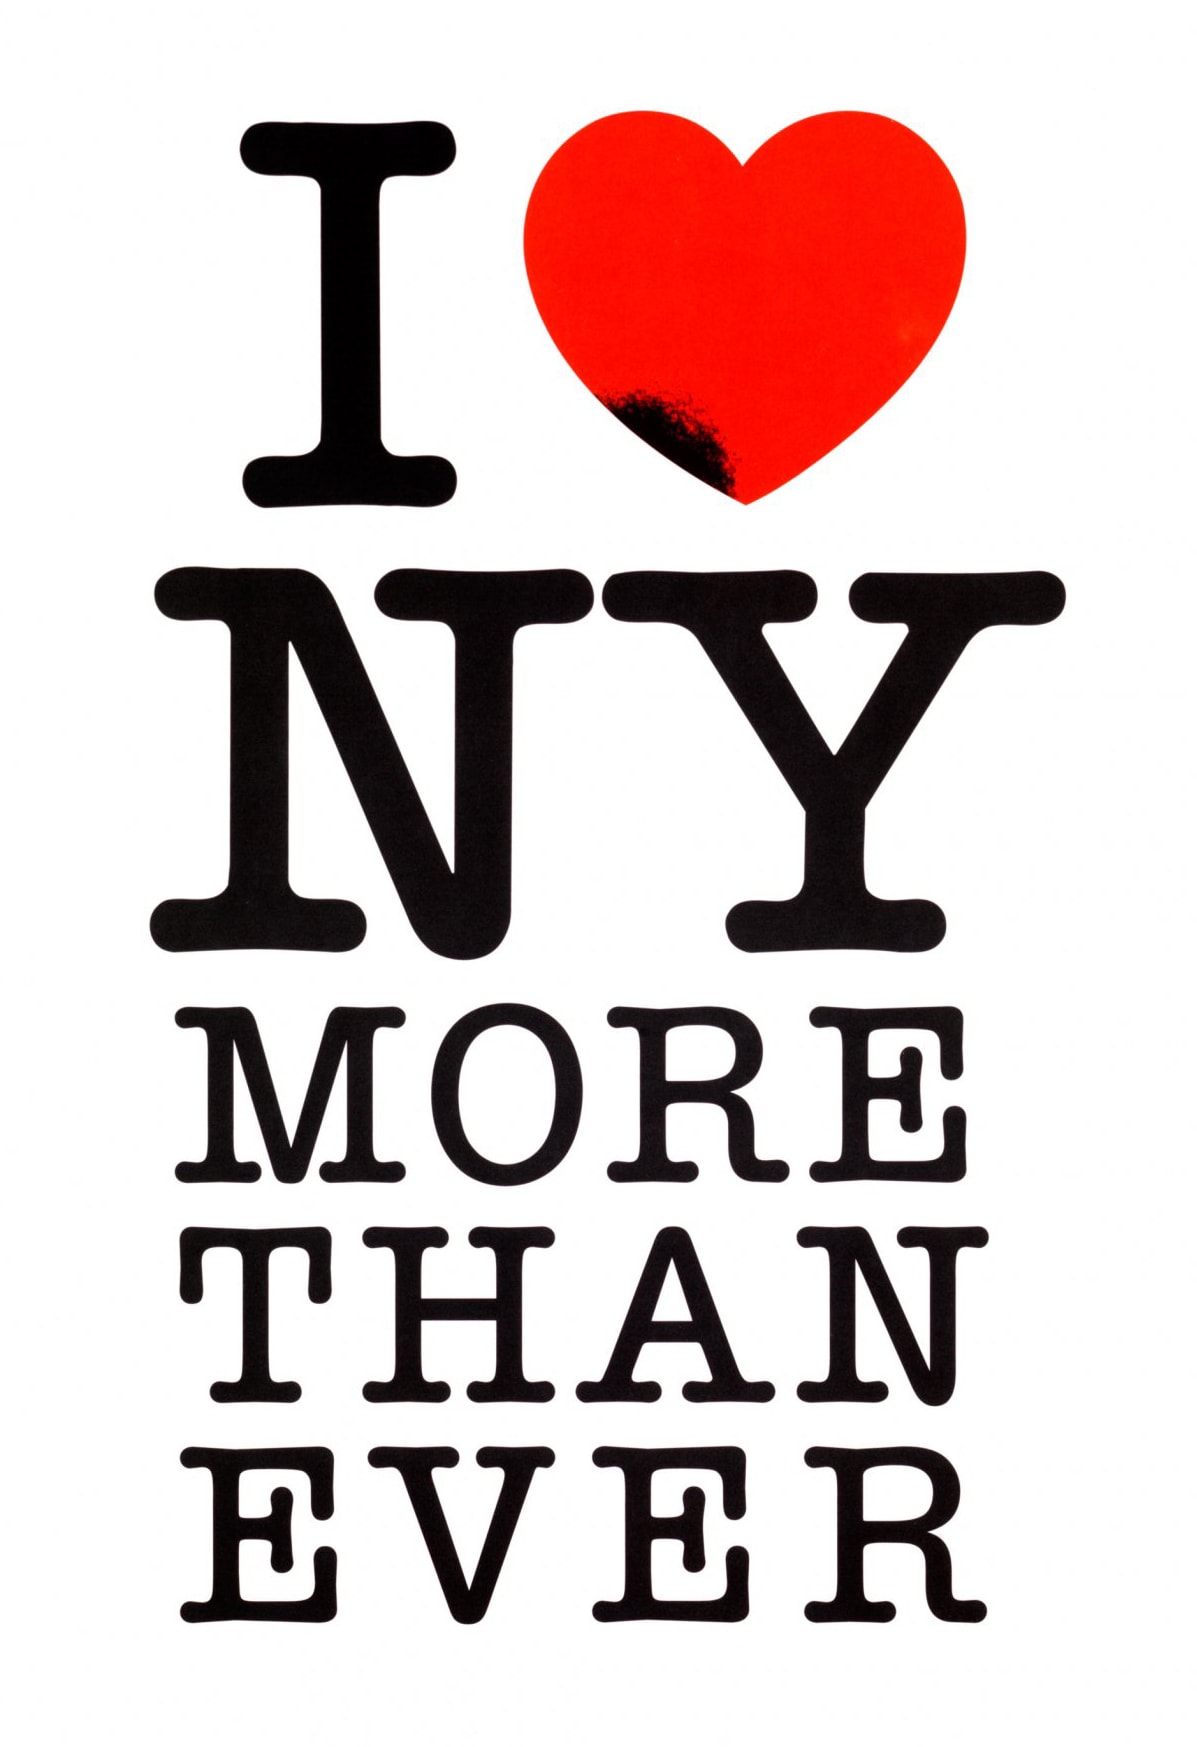 Milton Glaser's "I Love New York More Than Ever" poster, 2001.
